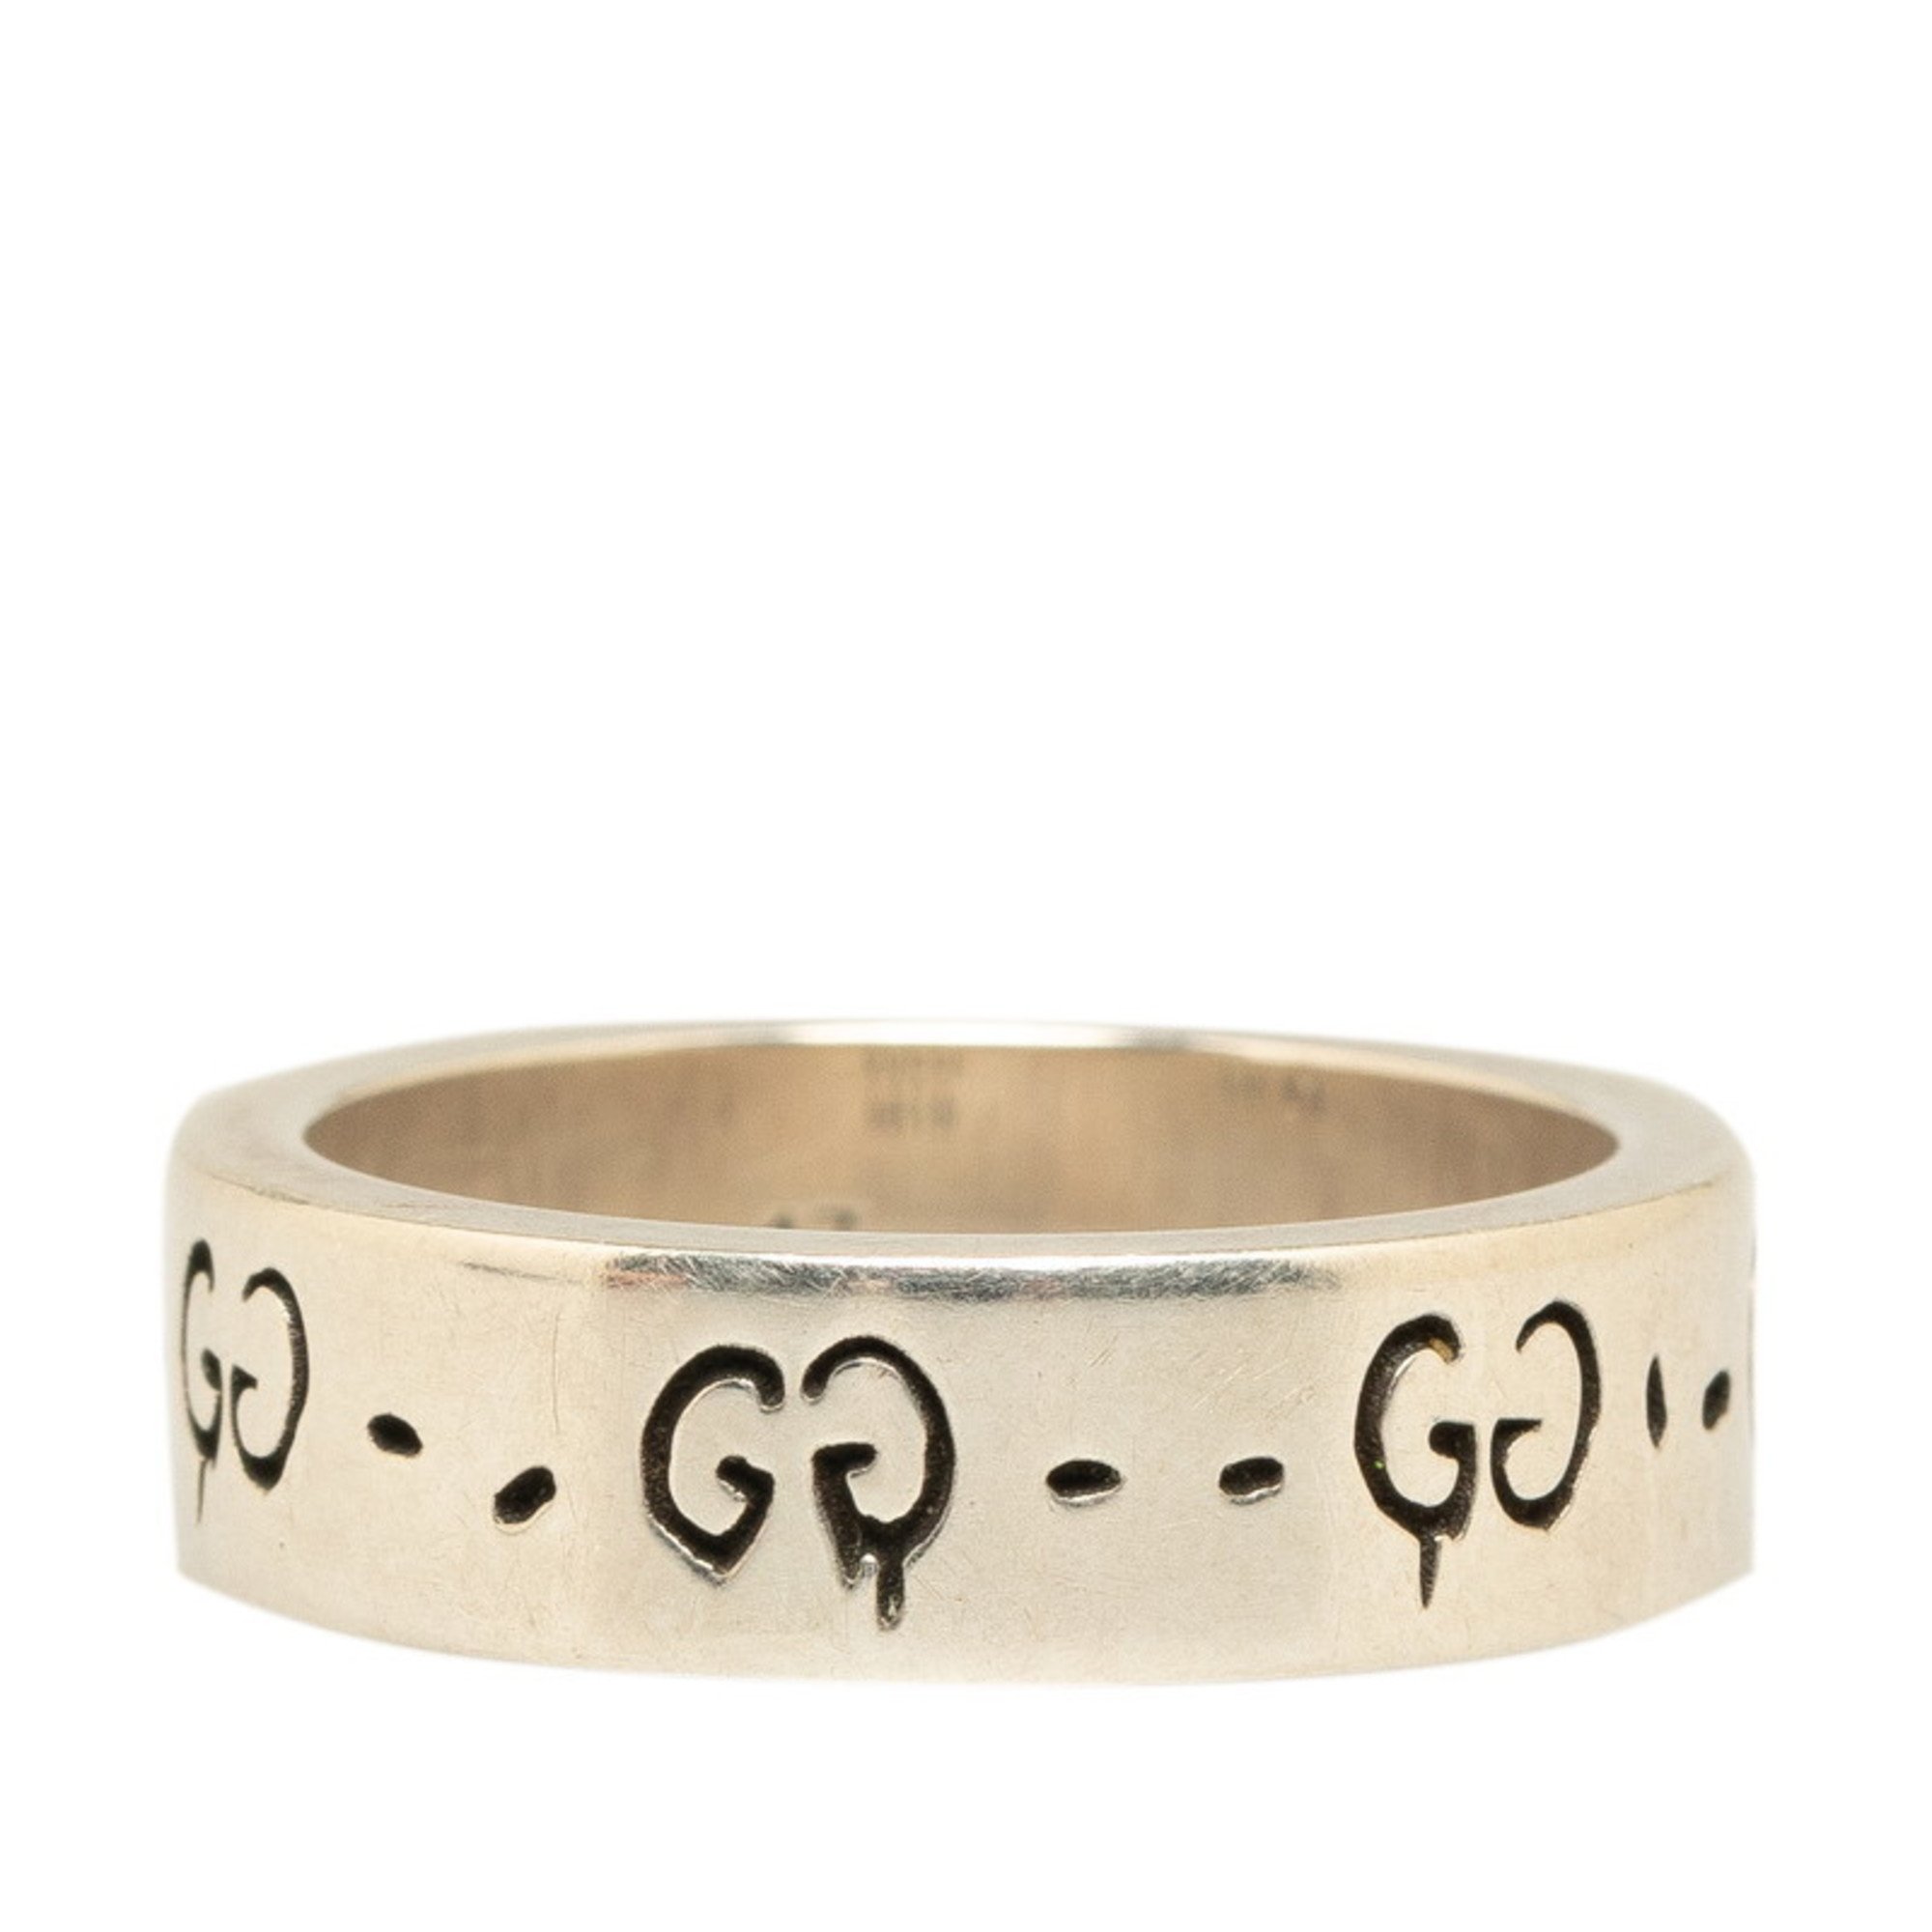 Gucci GG Ghost Ring, Silver SV925, Silver, Women's, GUCCI